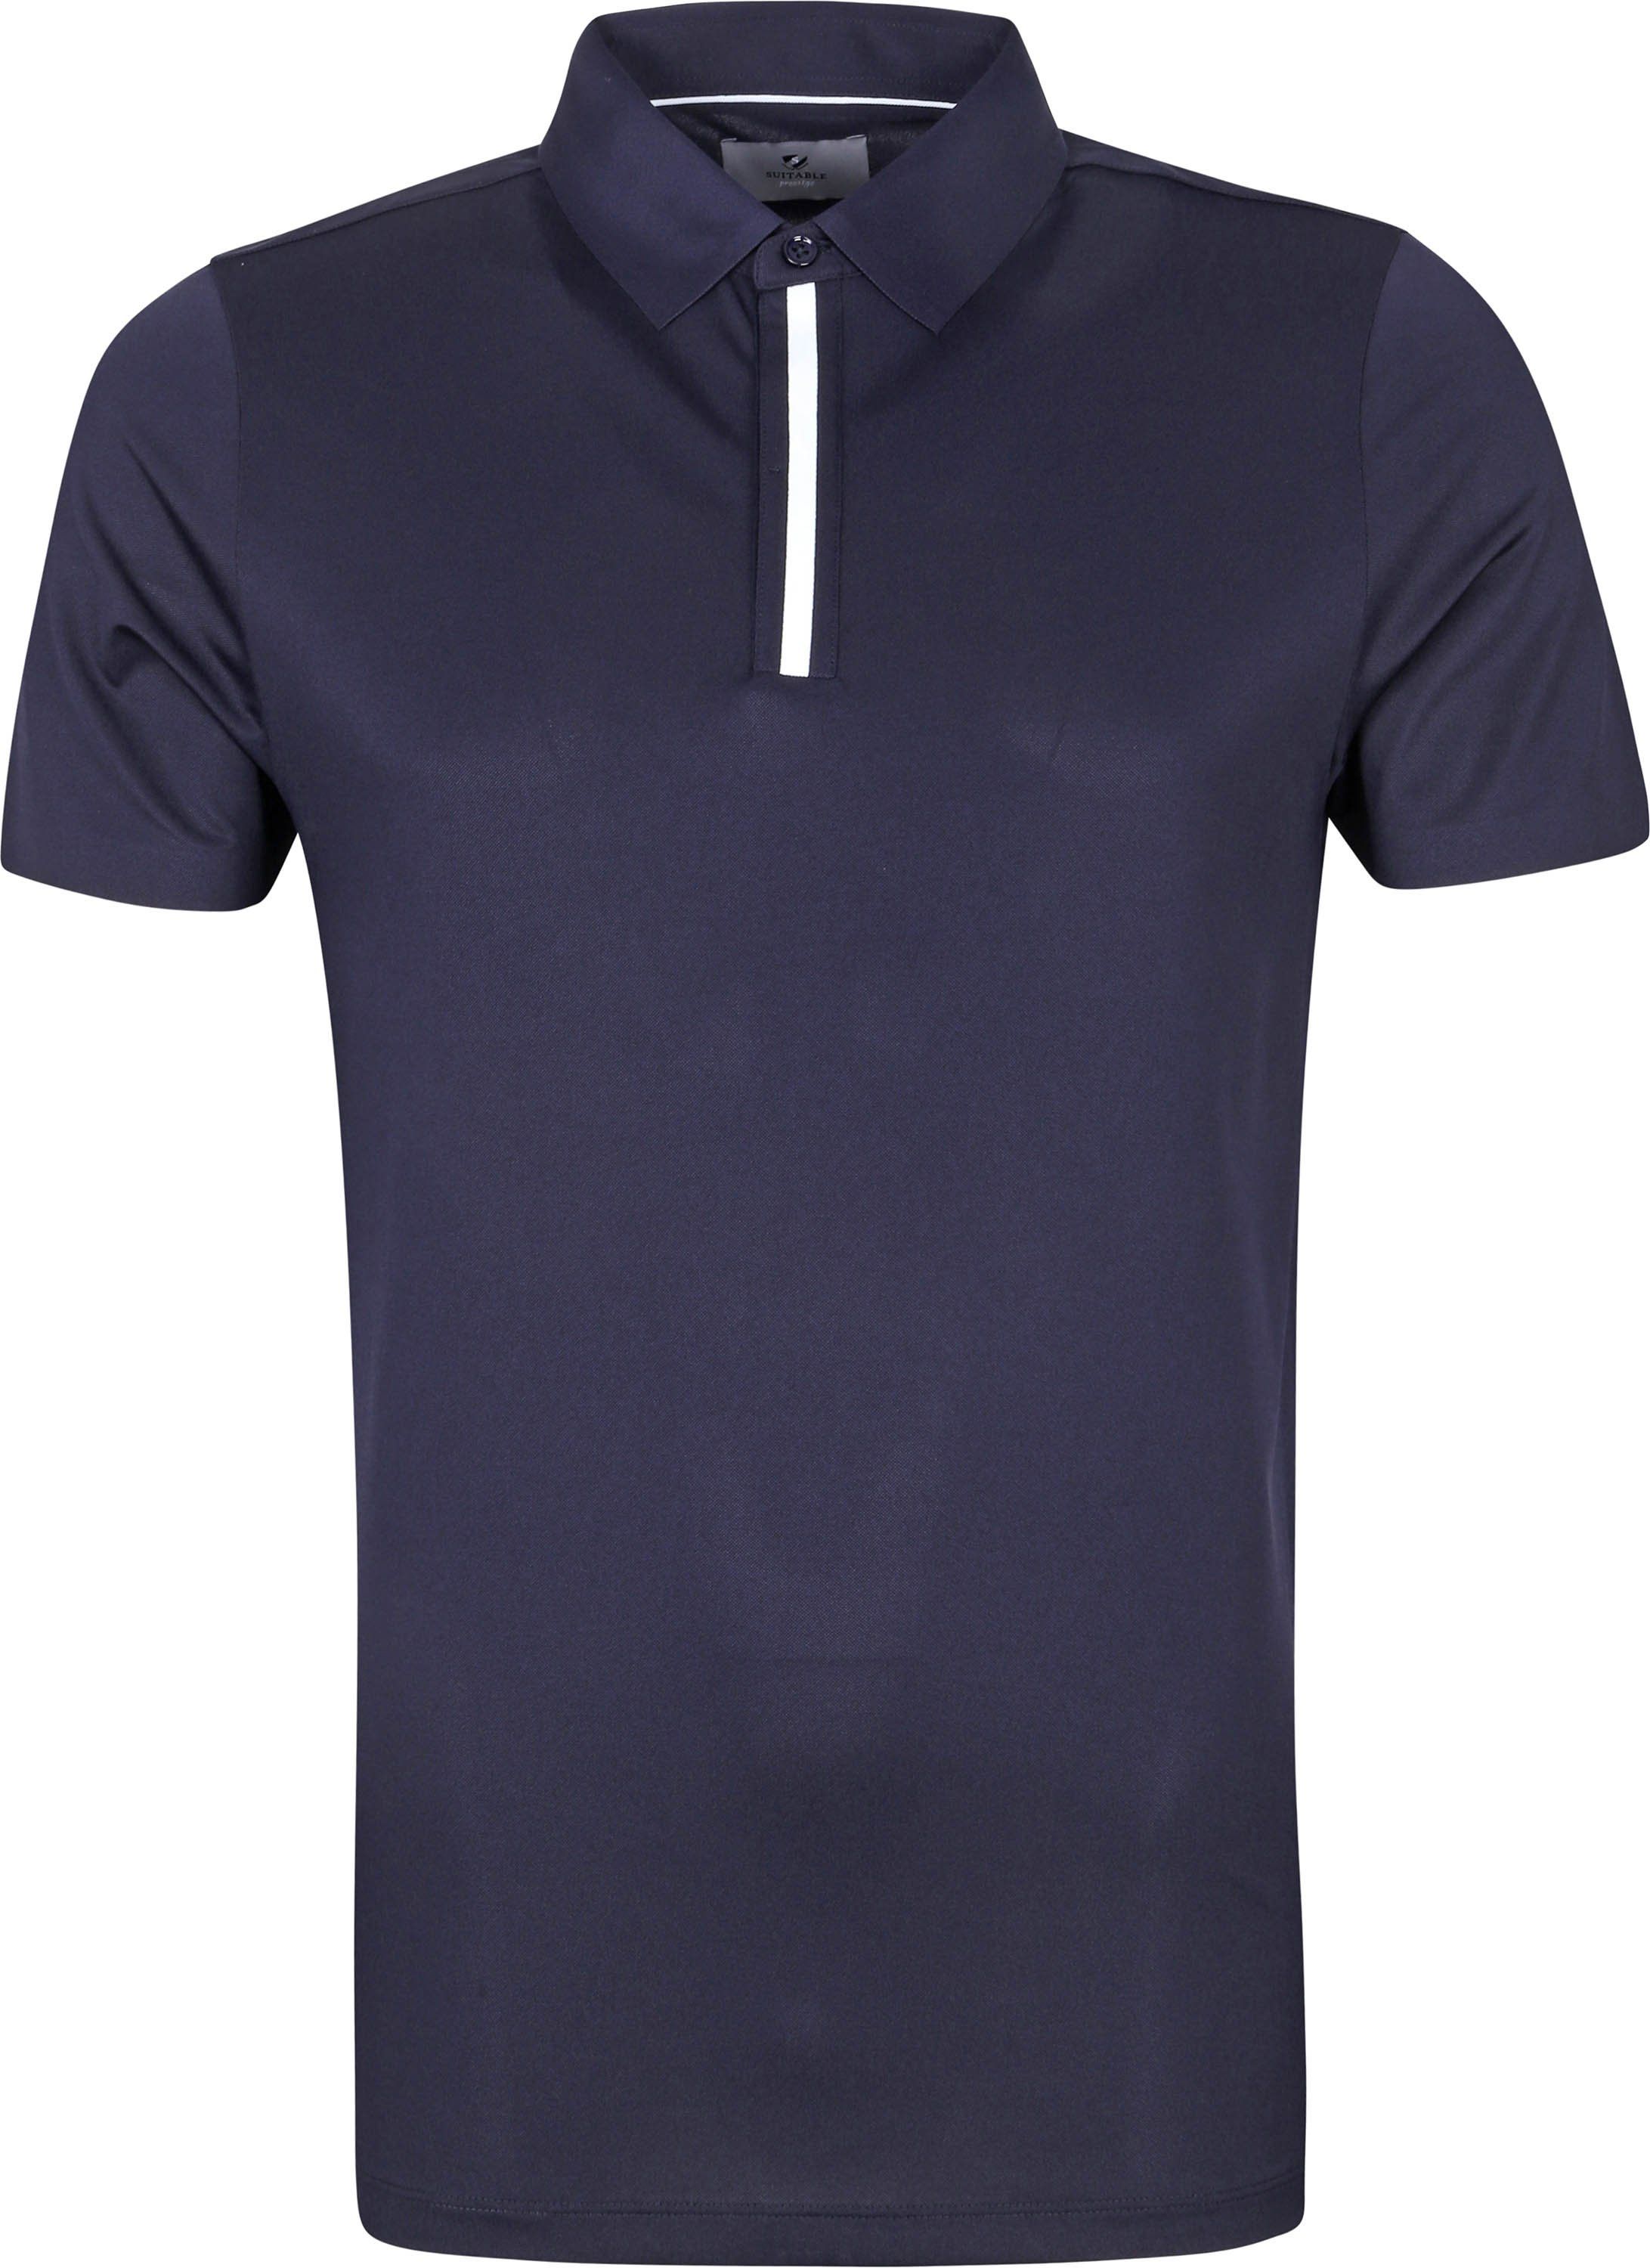 Suitable Prestige Iggy Polo Shirt Navy Dark Blue Blue size L